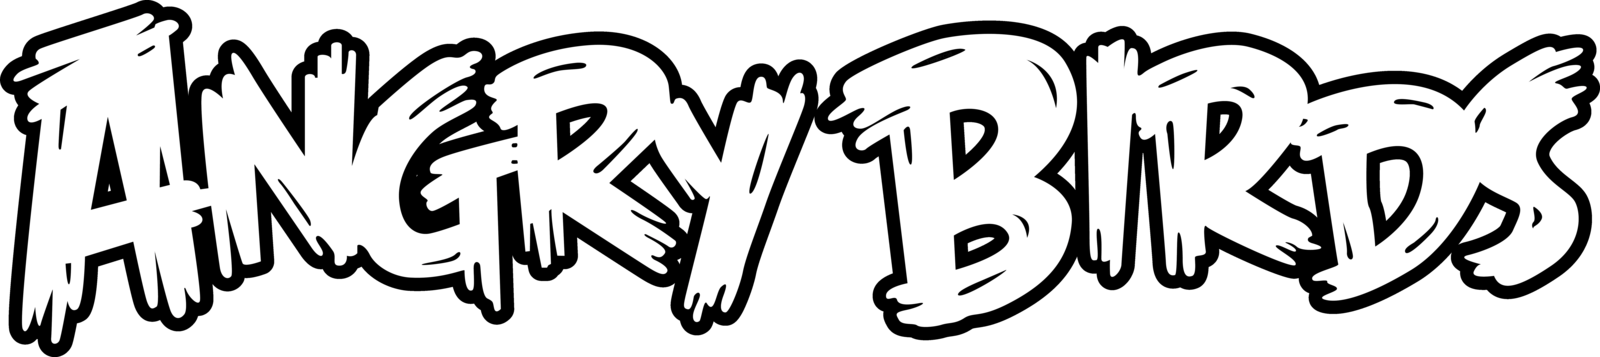 логотип бренда Angry birds